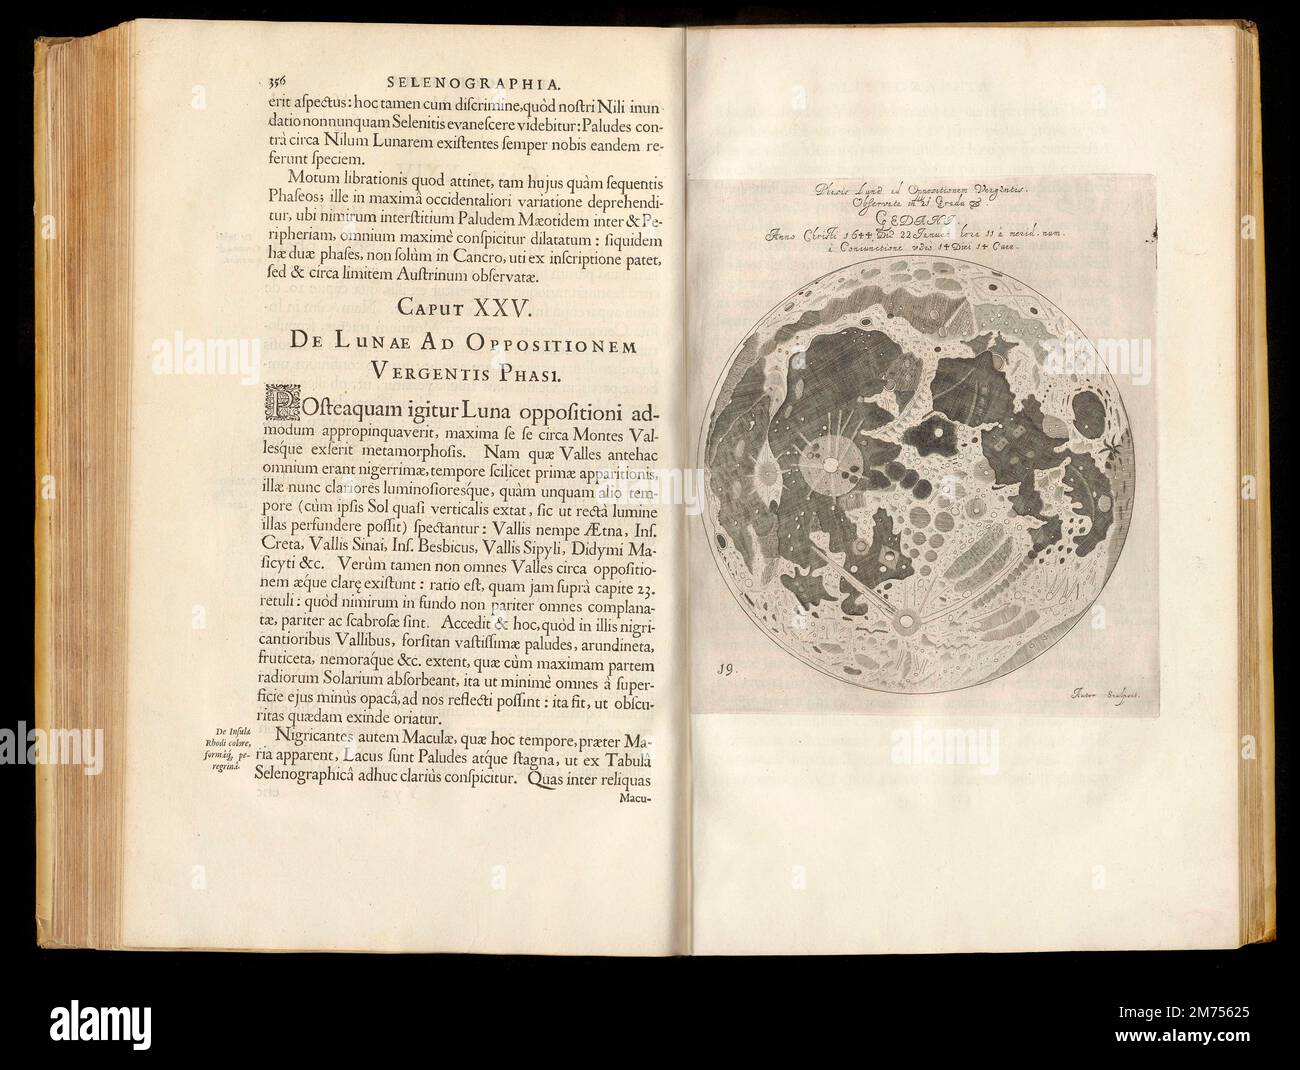 Selenographia, description of the moon, book by Johannes Hevelius, 1647 Stock Photo